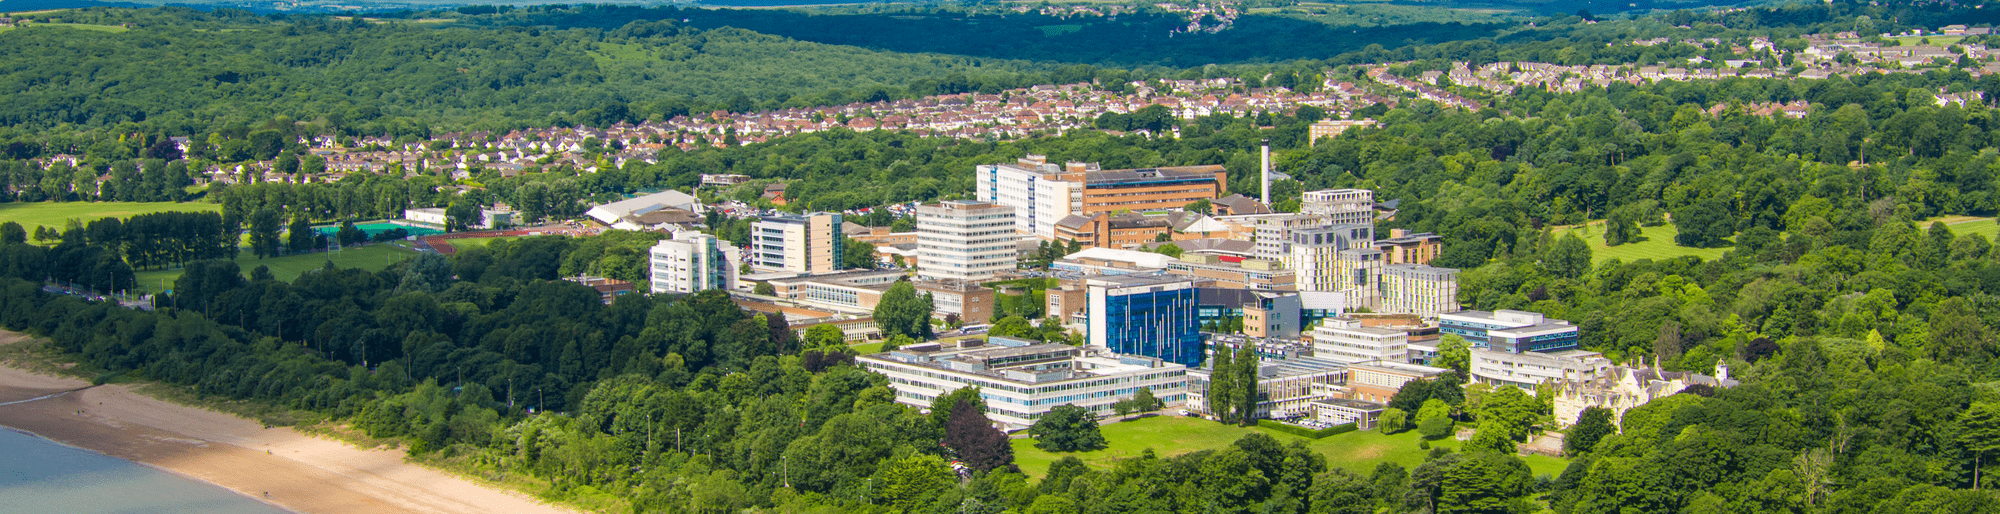 Swansea University Park Campus